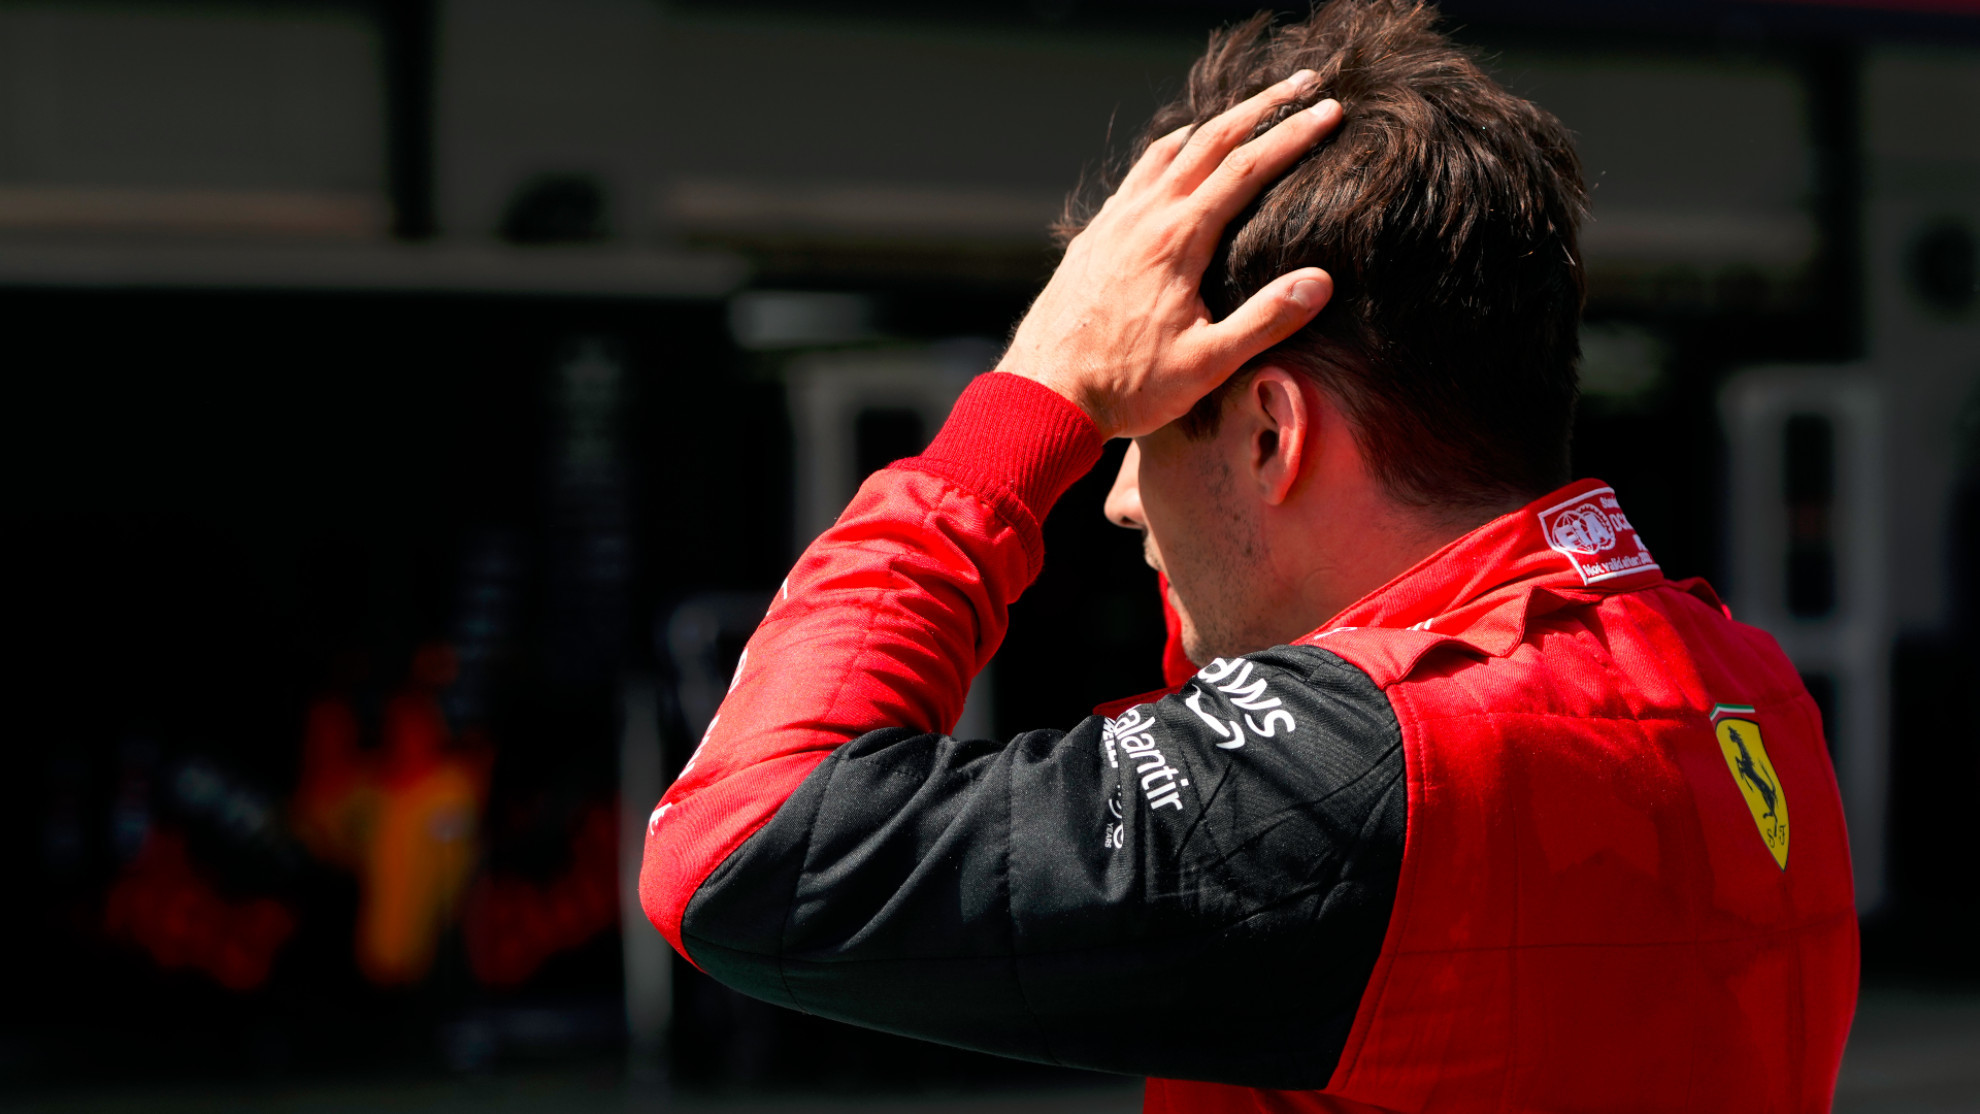 Charles Leclerc abandonó por problemas de potencia en su coche